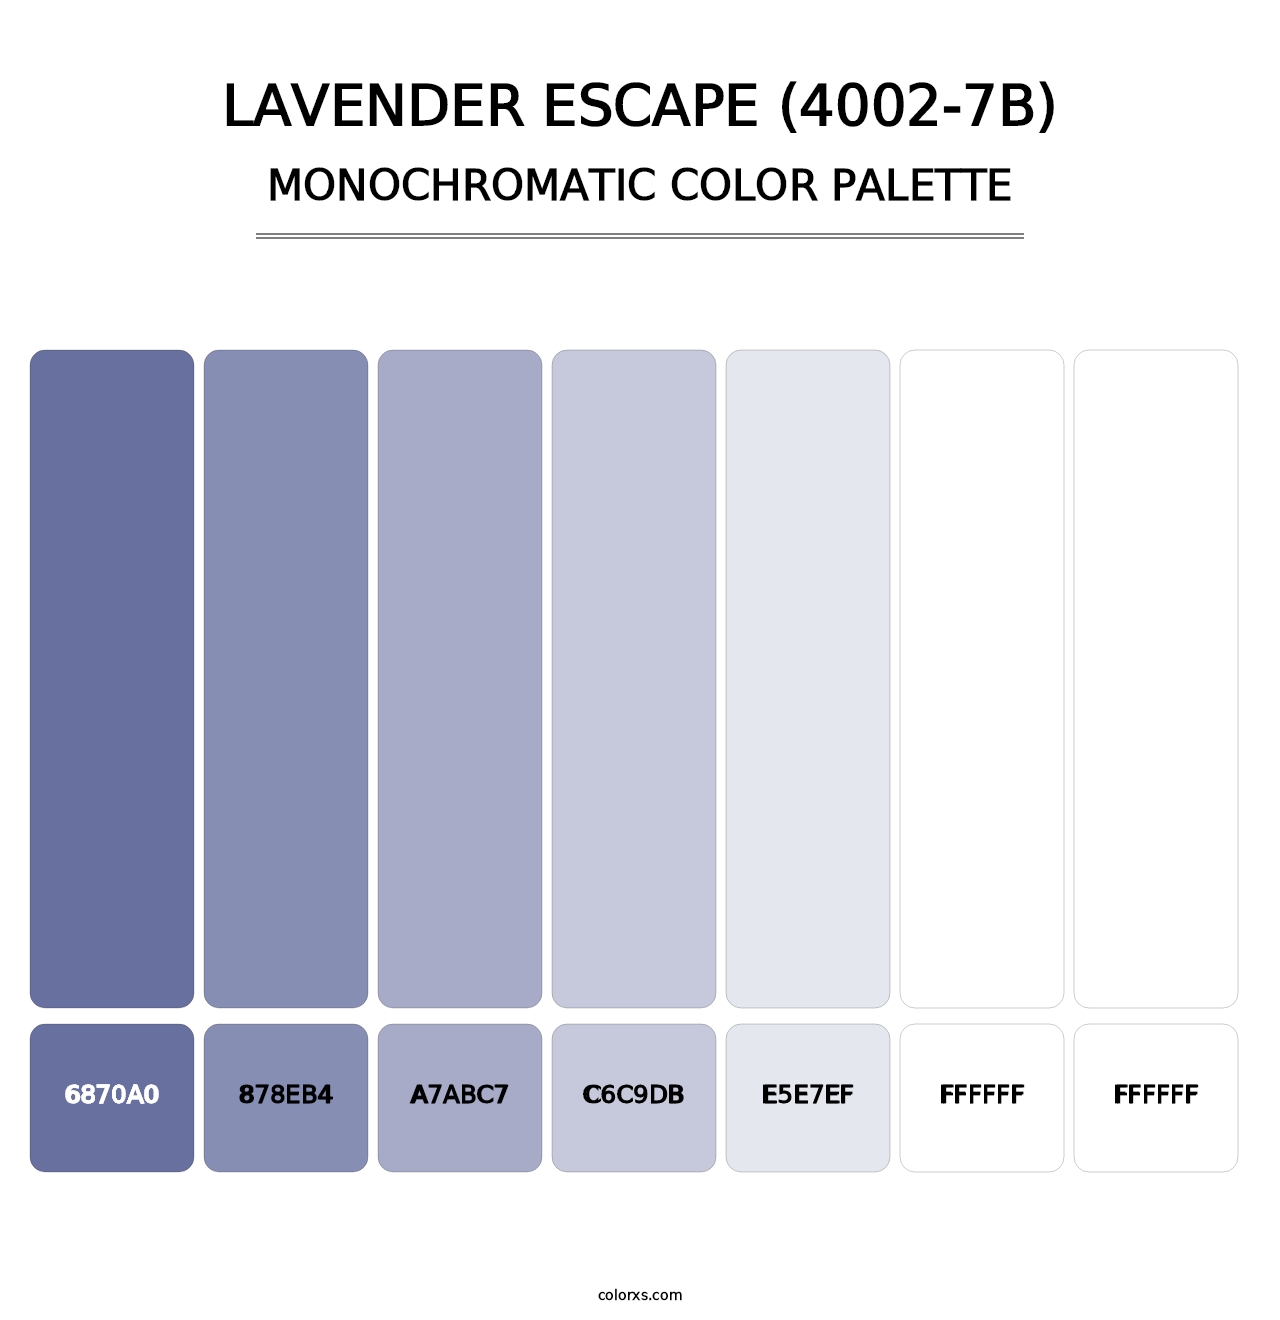 Lavender Escape (4002-7B) - Monochromatic Color Palette